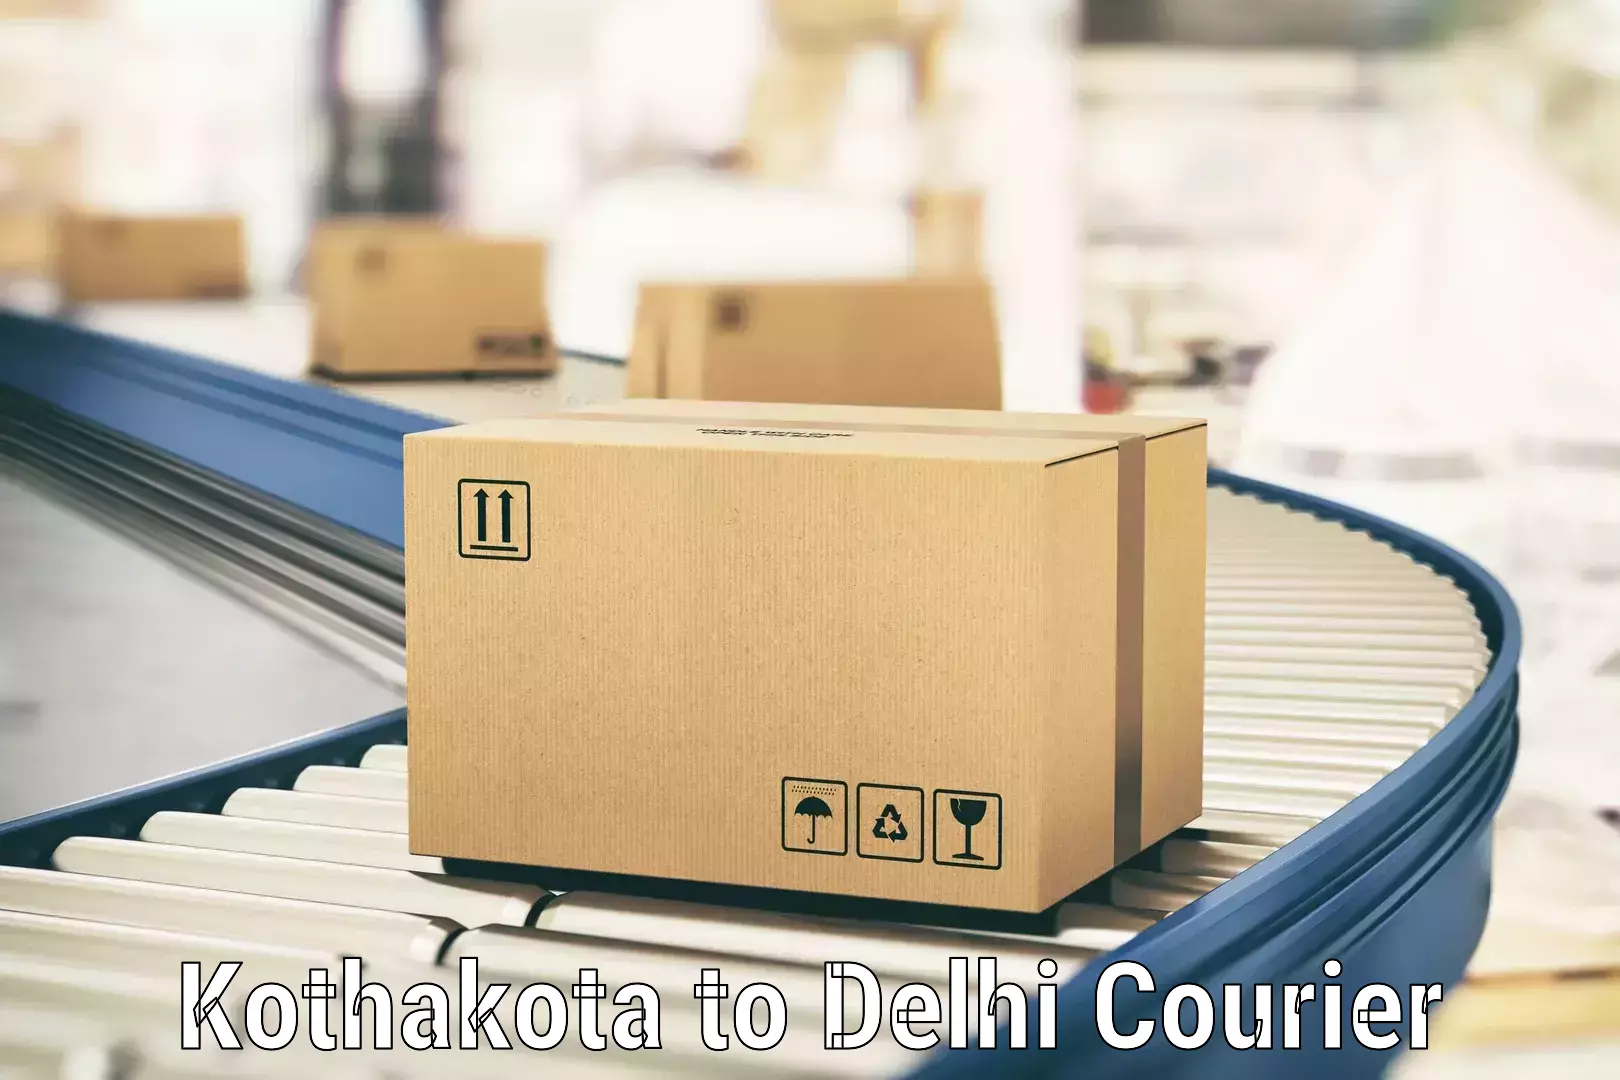 Urgent courier needs Kothakota to Krishna Nagar